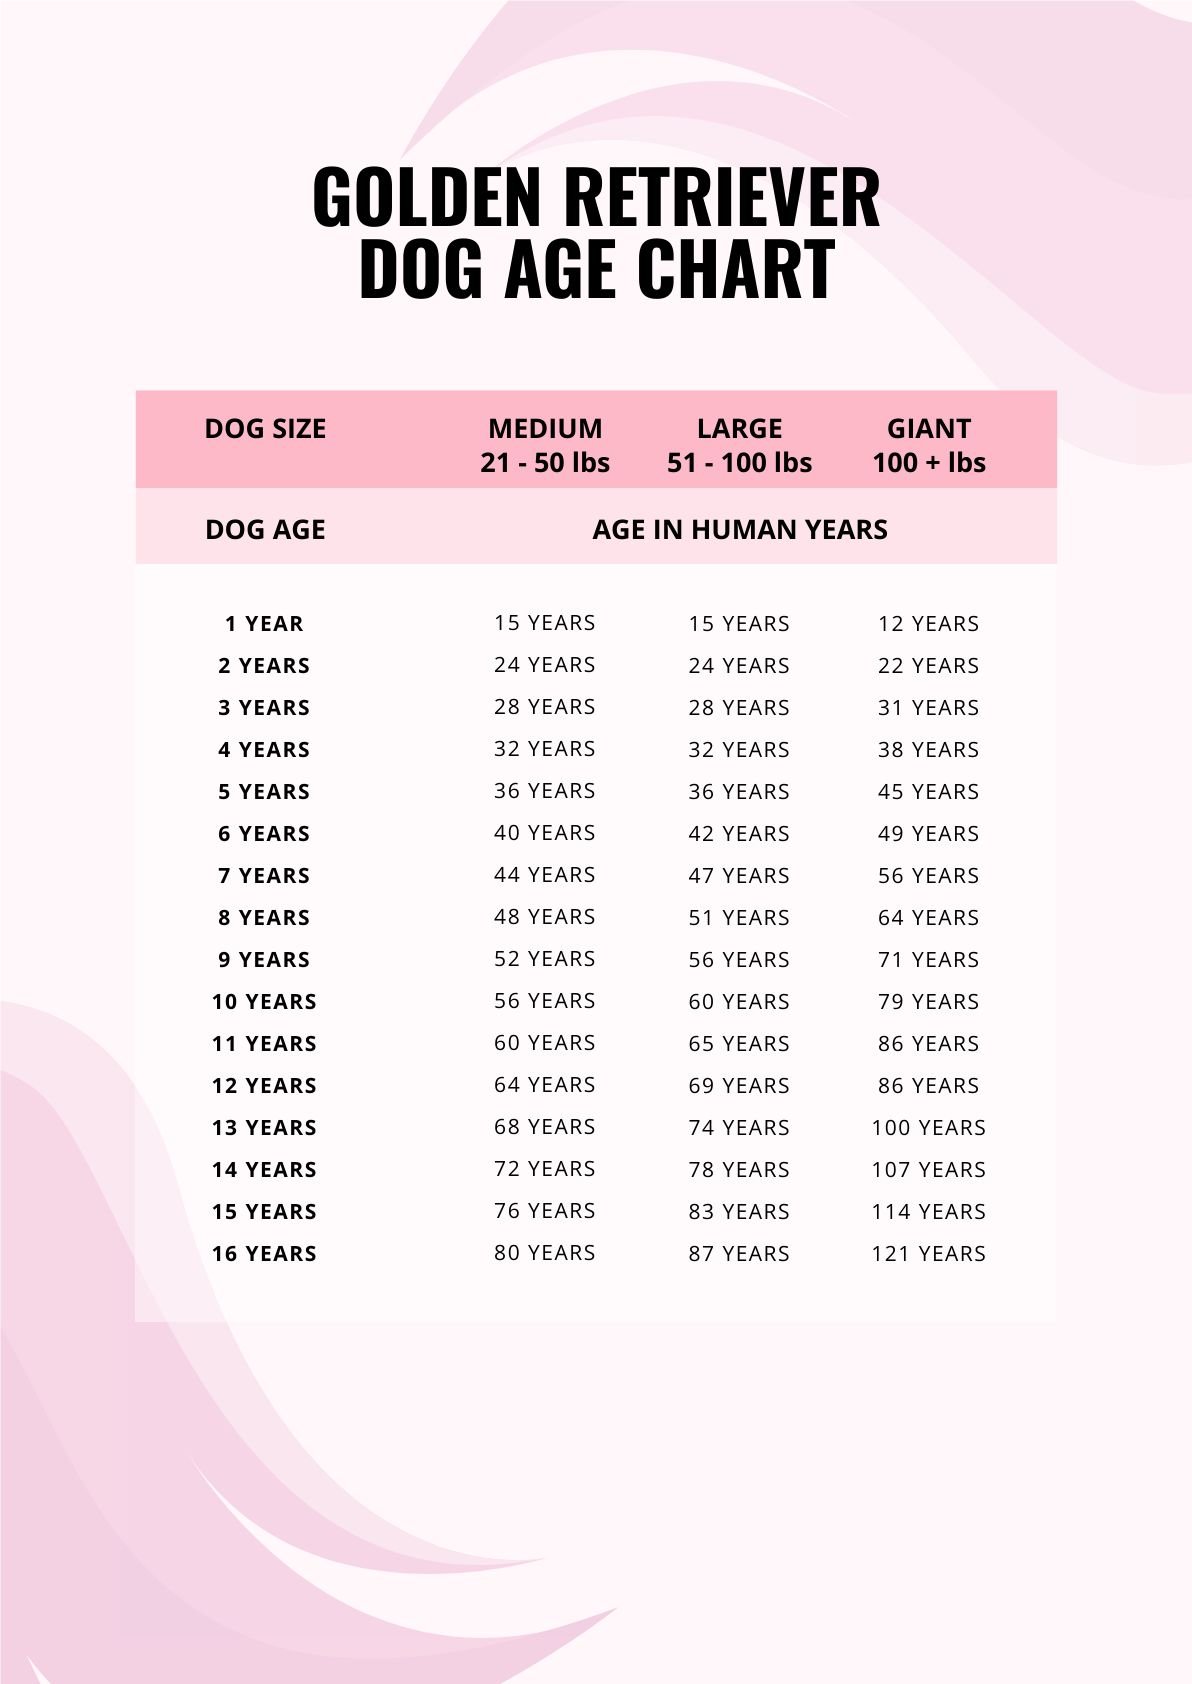 Golden Retriever Dog Age Chart in PDF